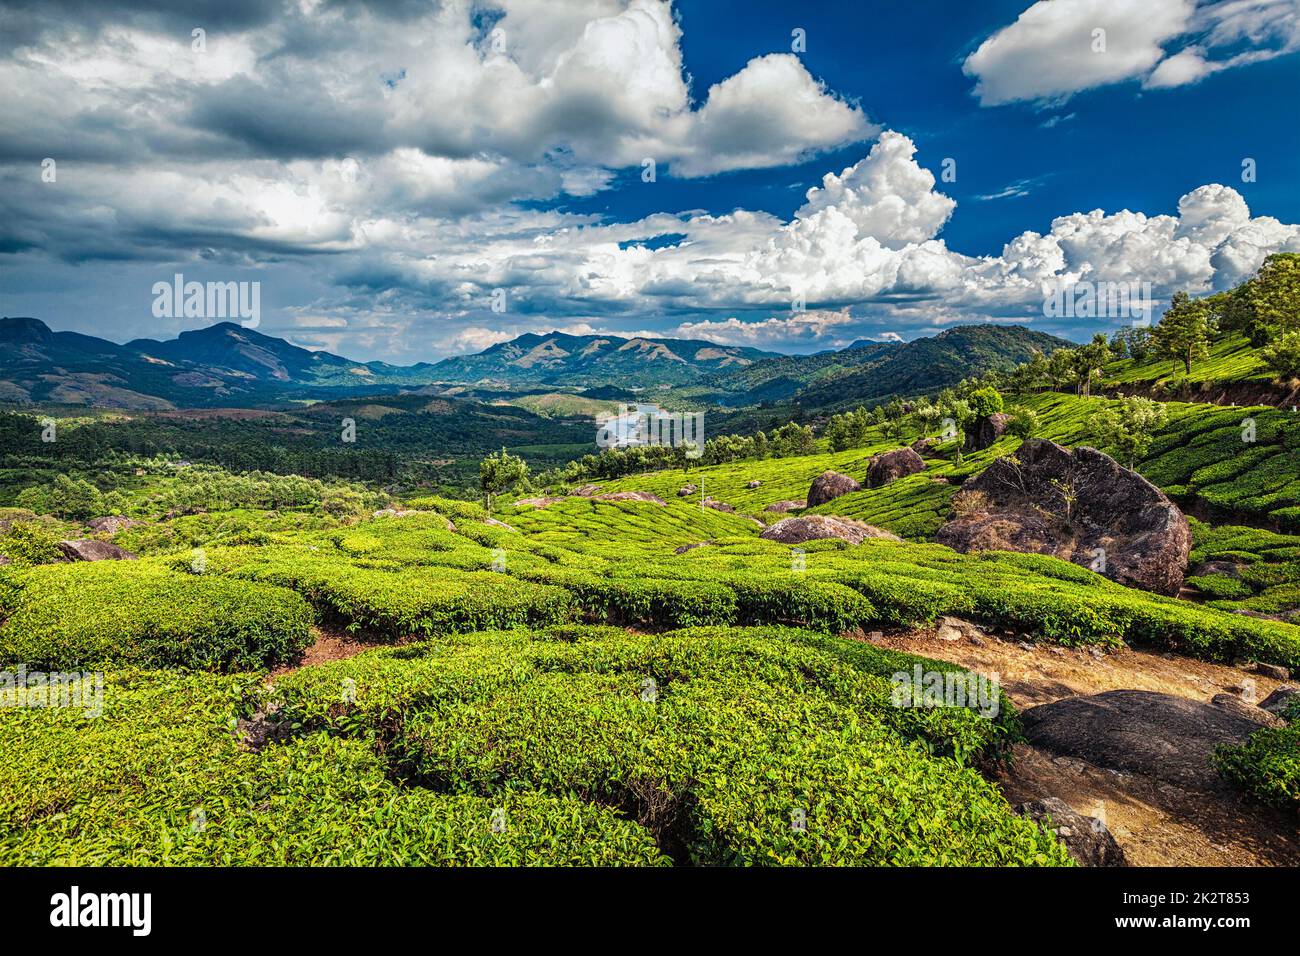 Tea plantations and river in hills, Kerala, India Stock Photo